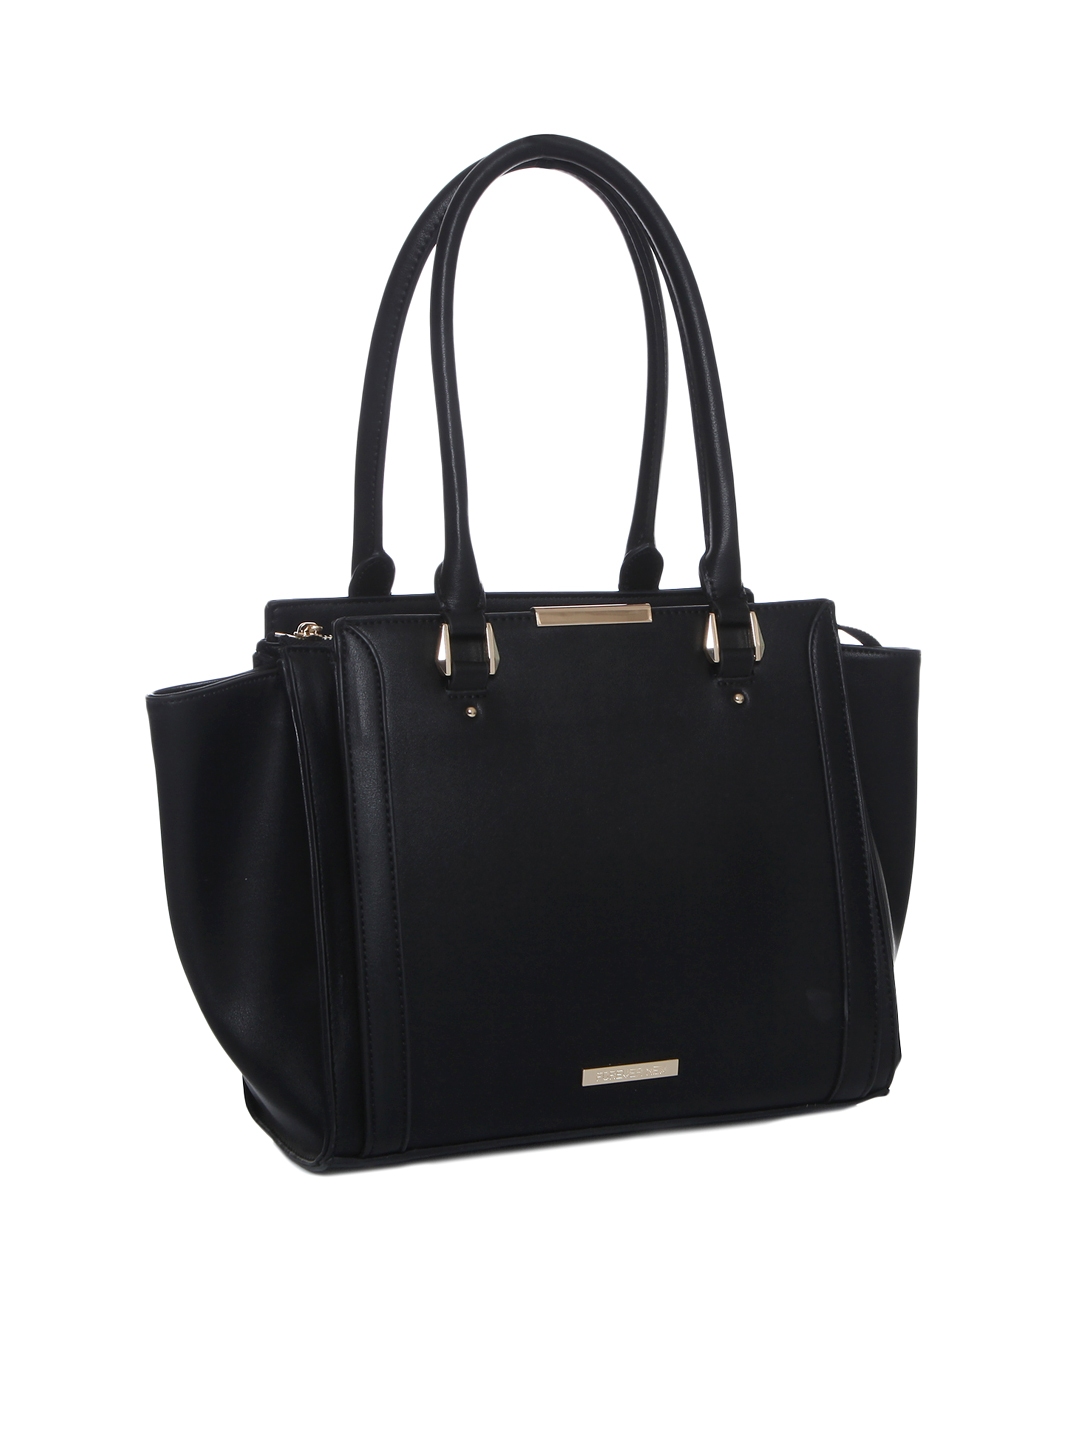 Buy Forever New Black Shoulder Bag - Handbags for Women 1869037 | Myntra